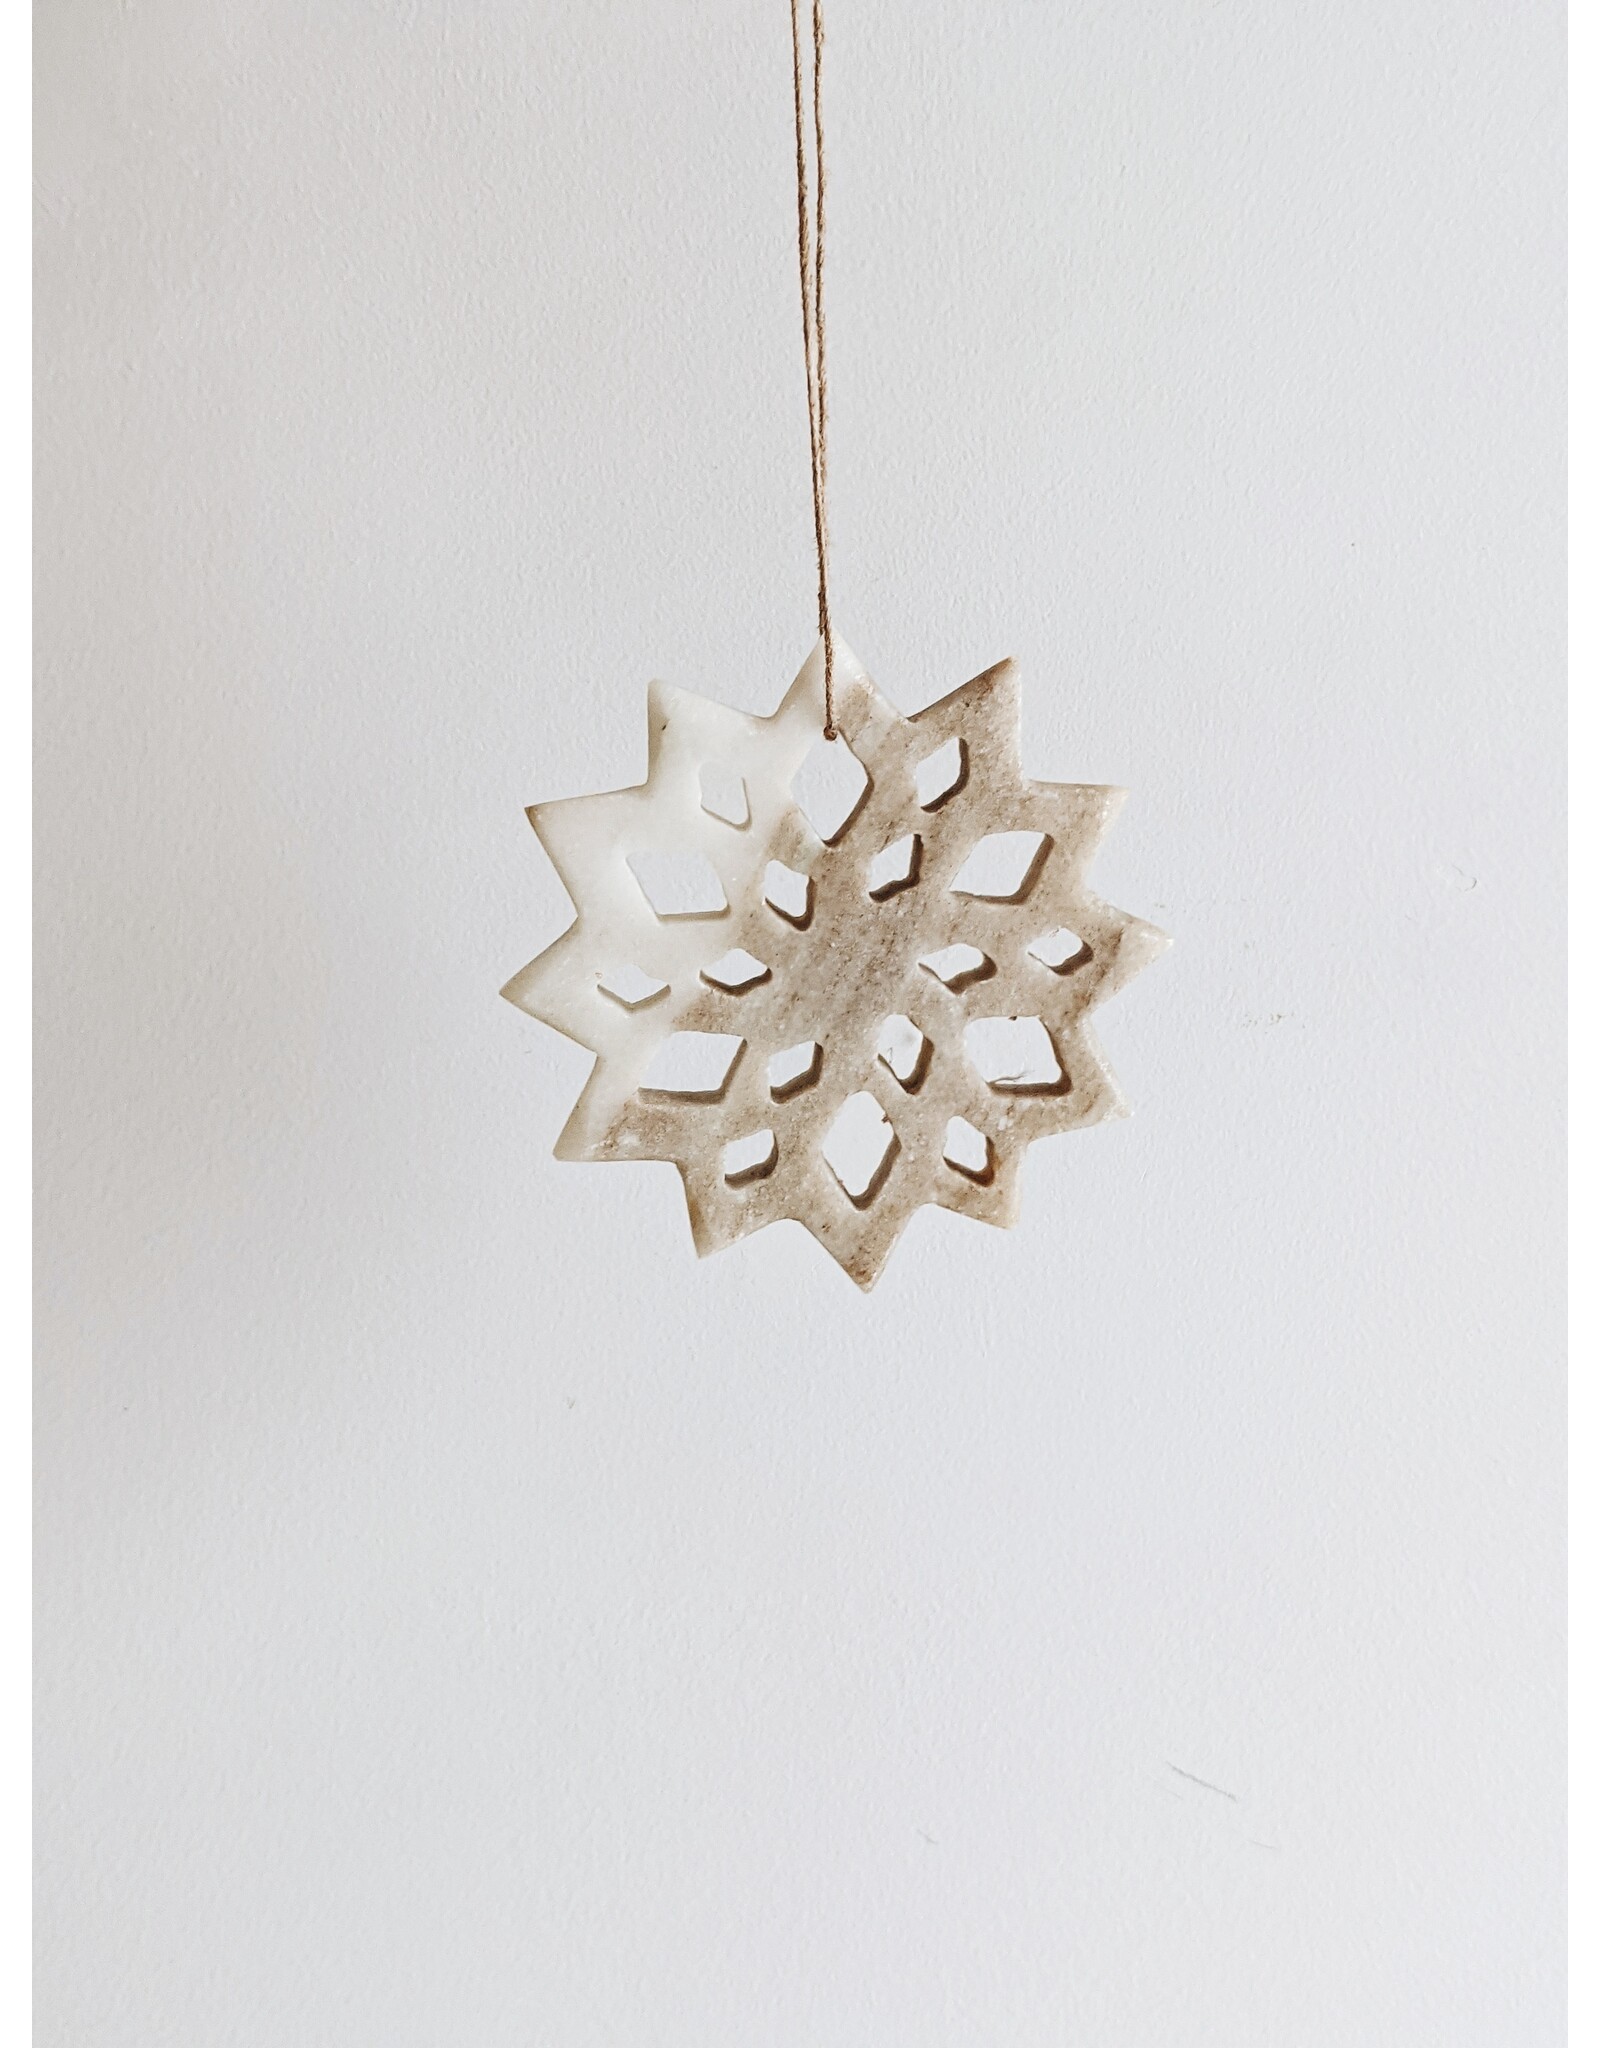 Snowflake Ornament - Choose the color